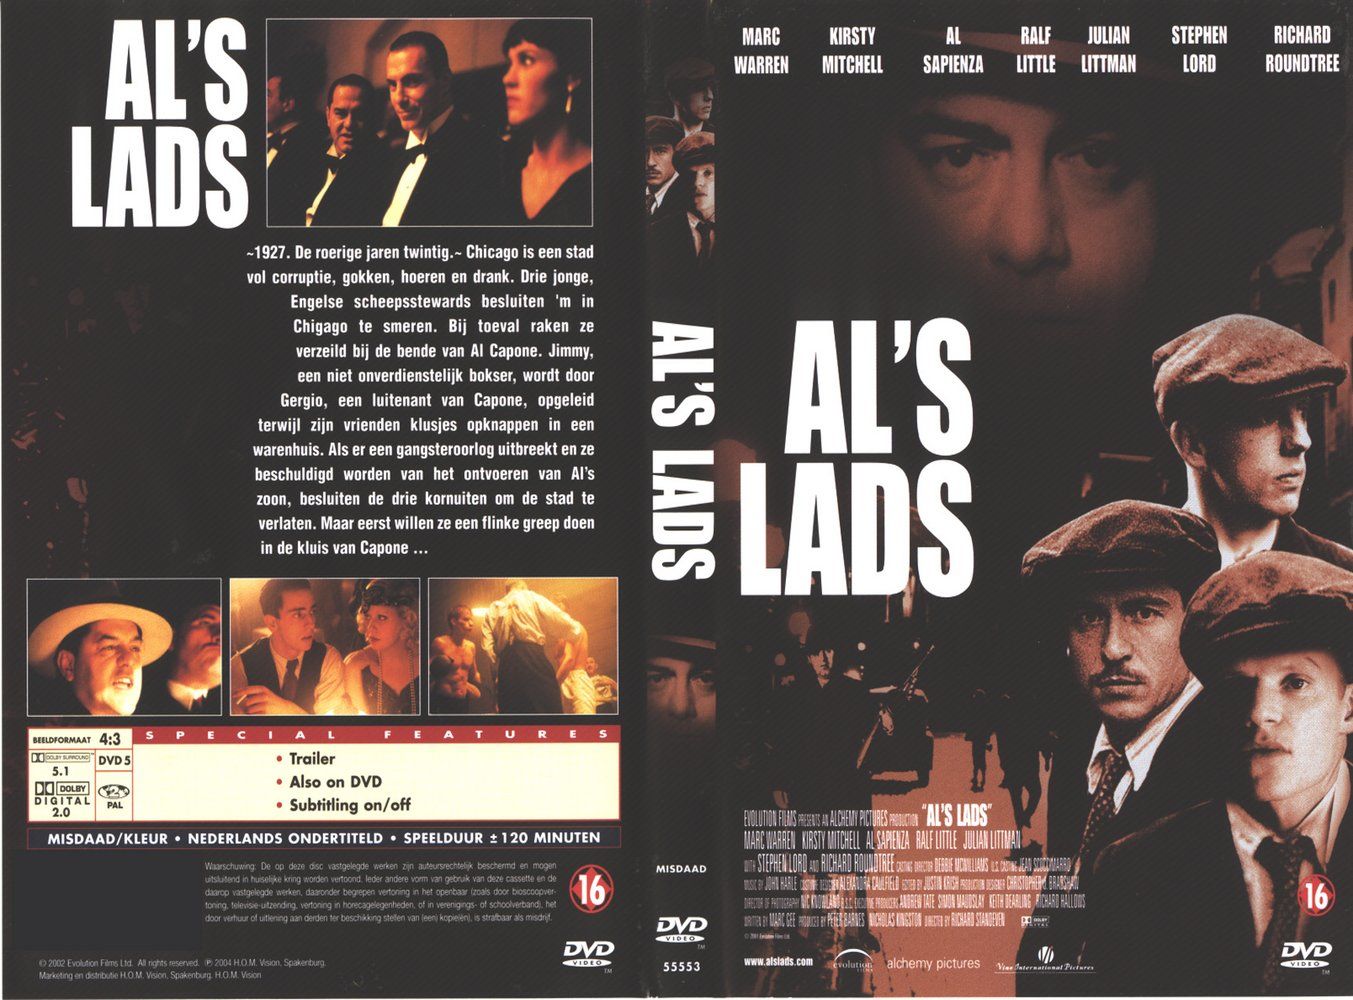 Al's Lads (2002)